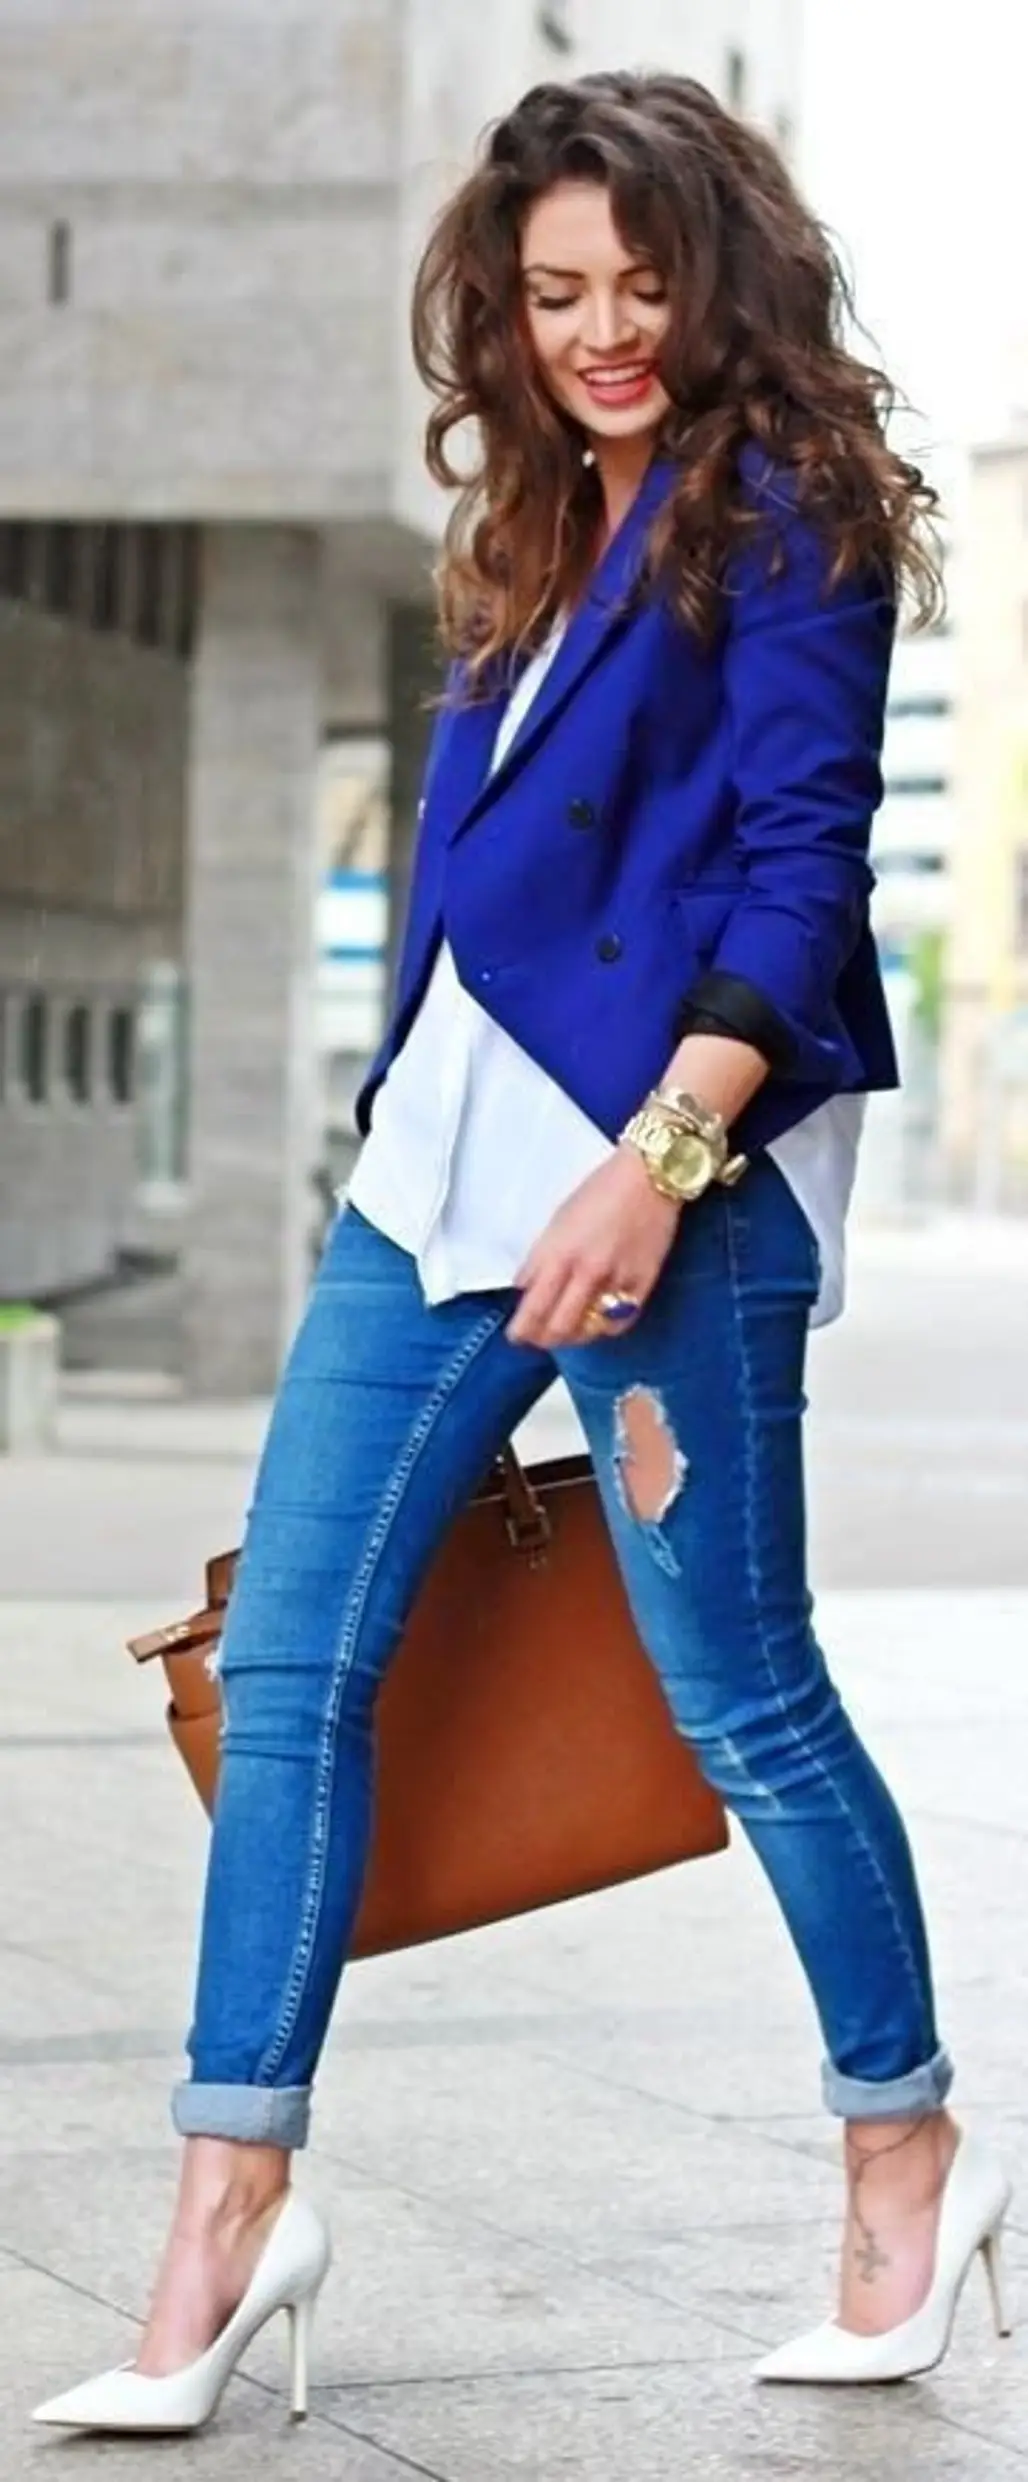 clothing,blue,jeans,footwear,denim,